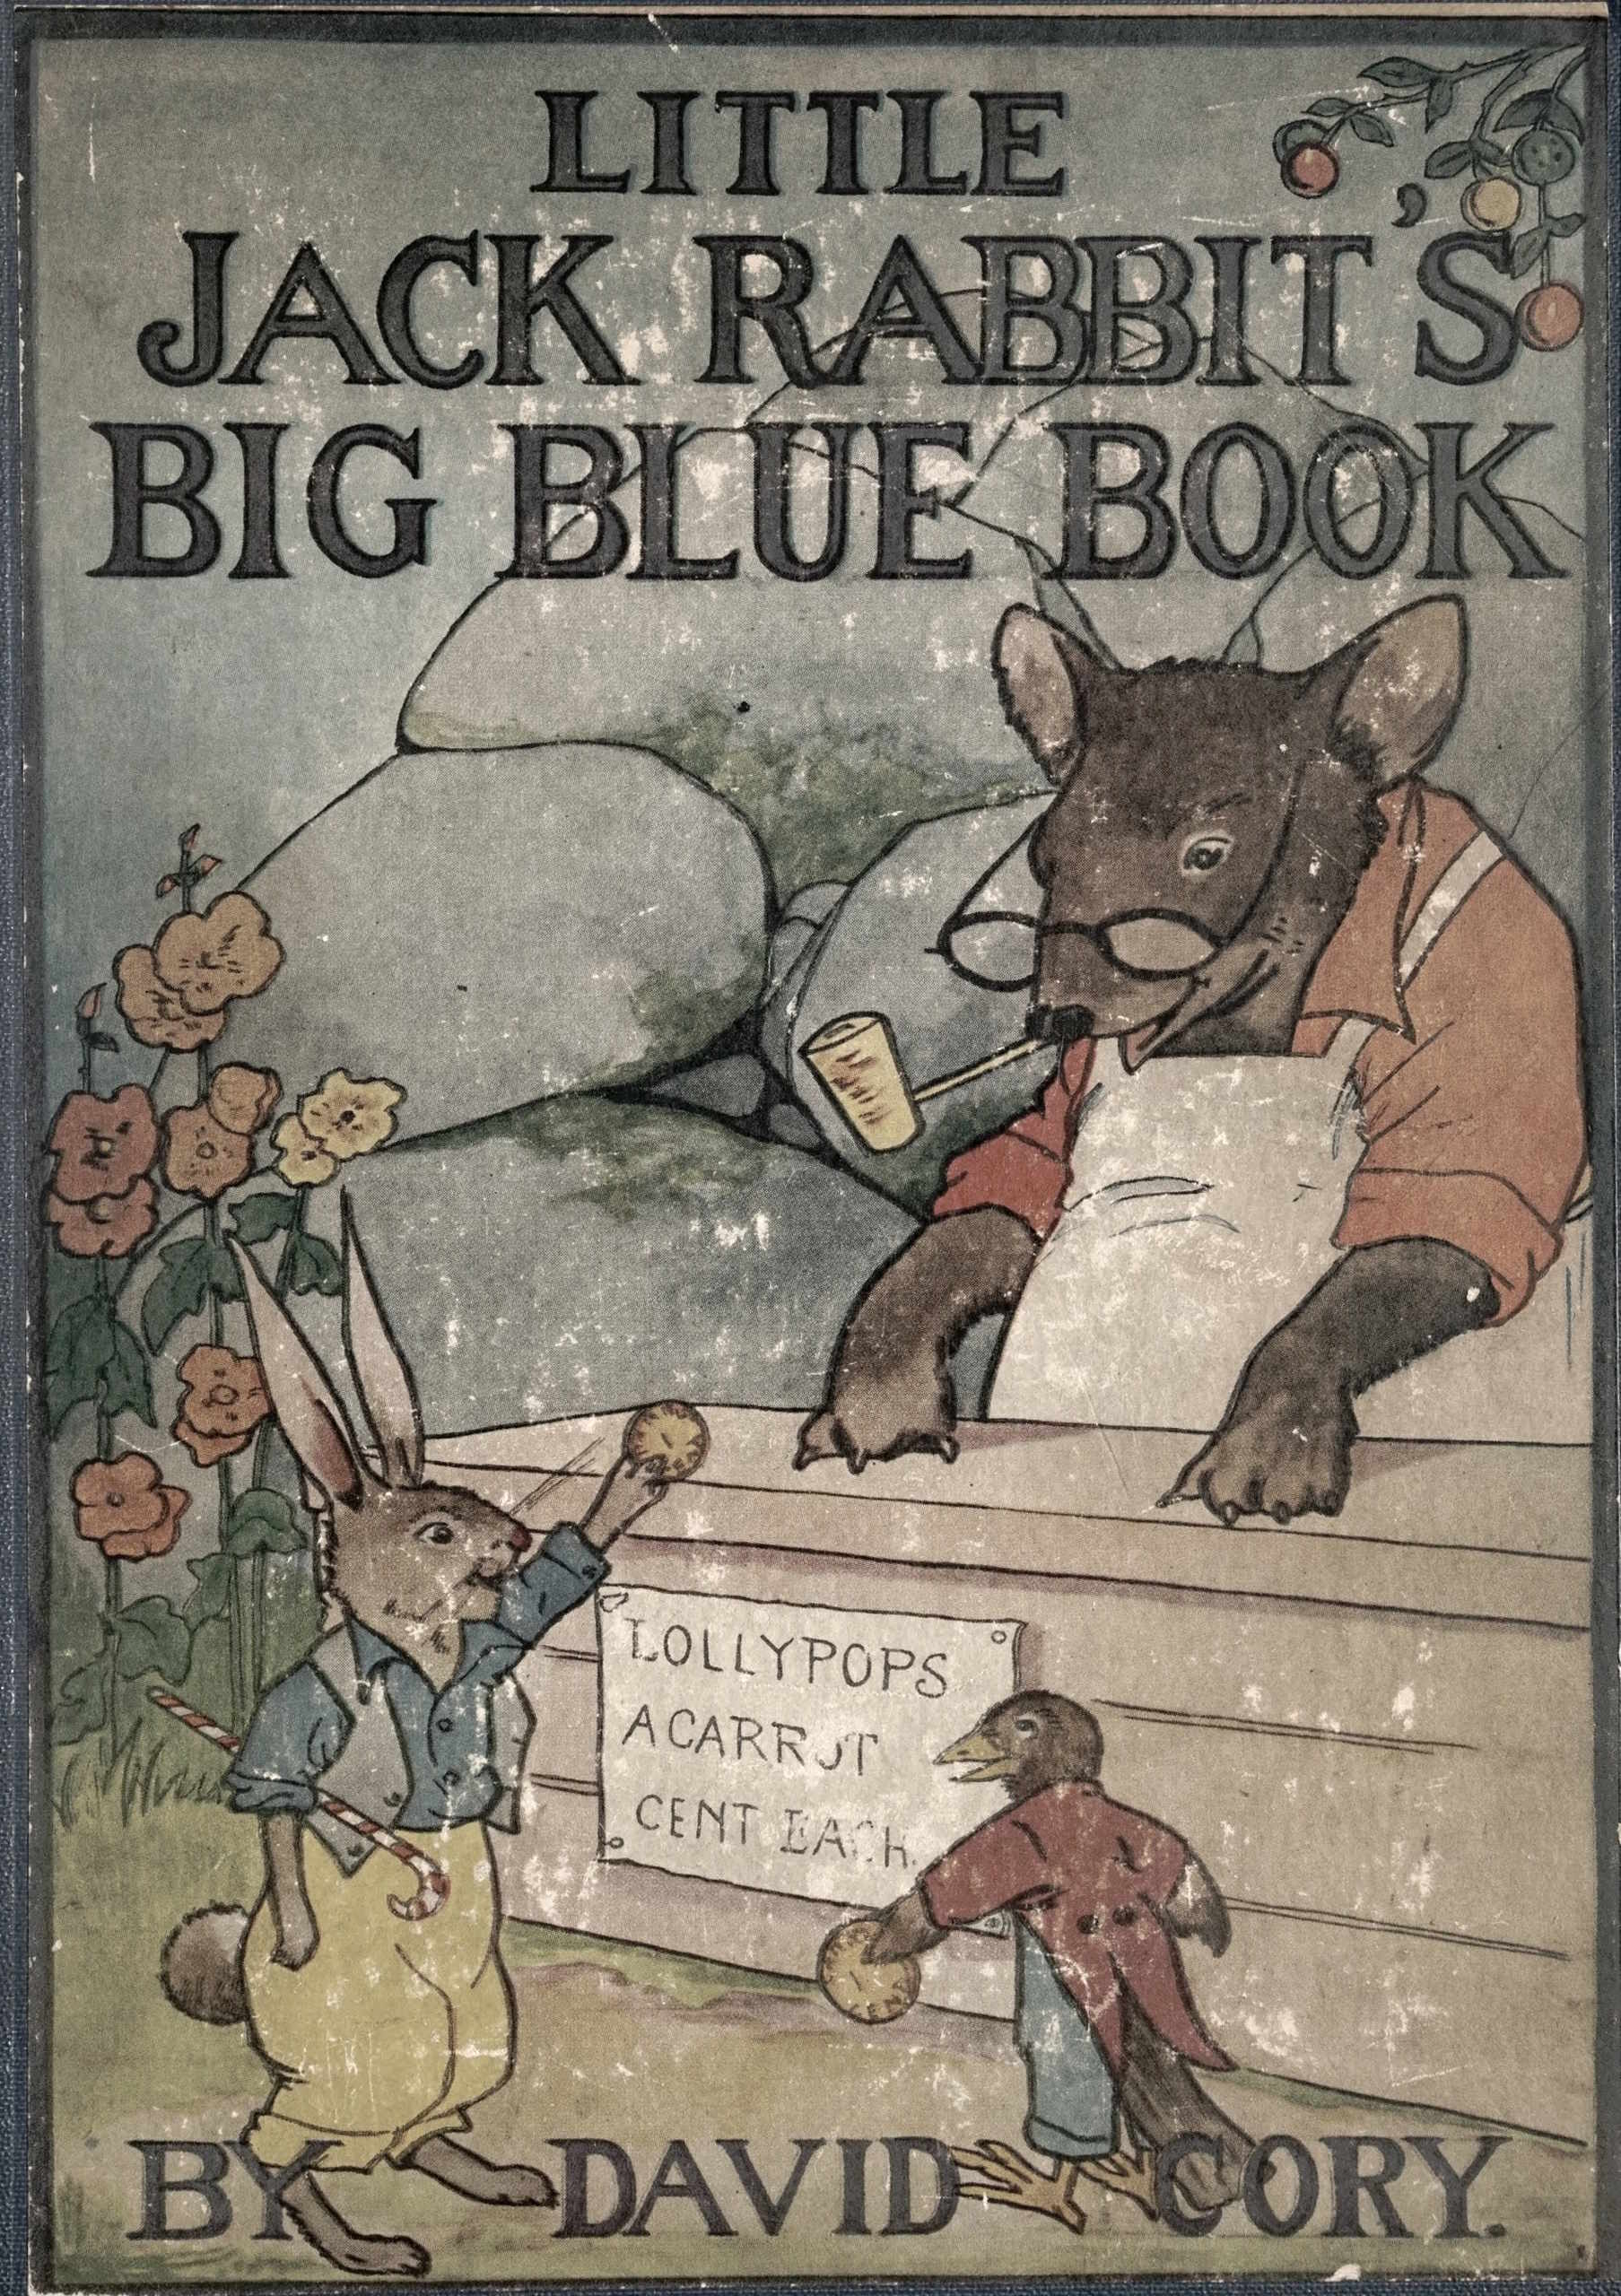 Little Jack Rabbit's big blue book